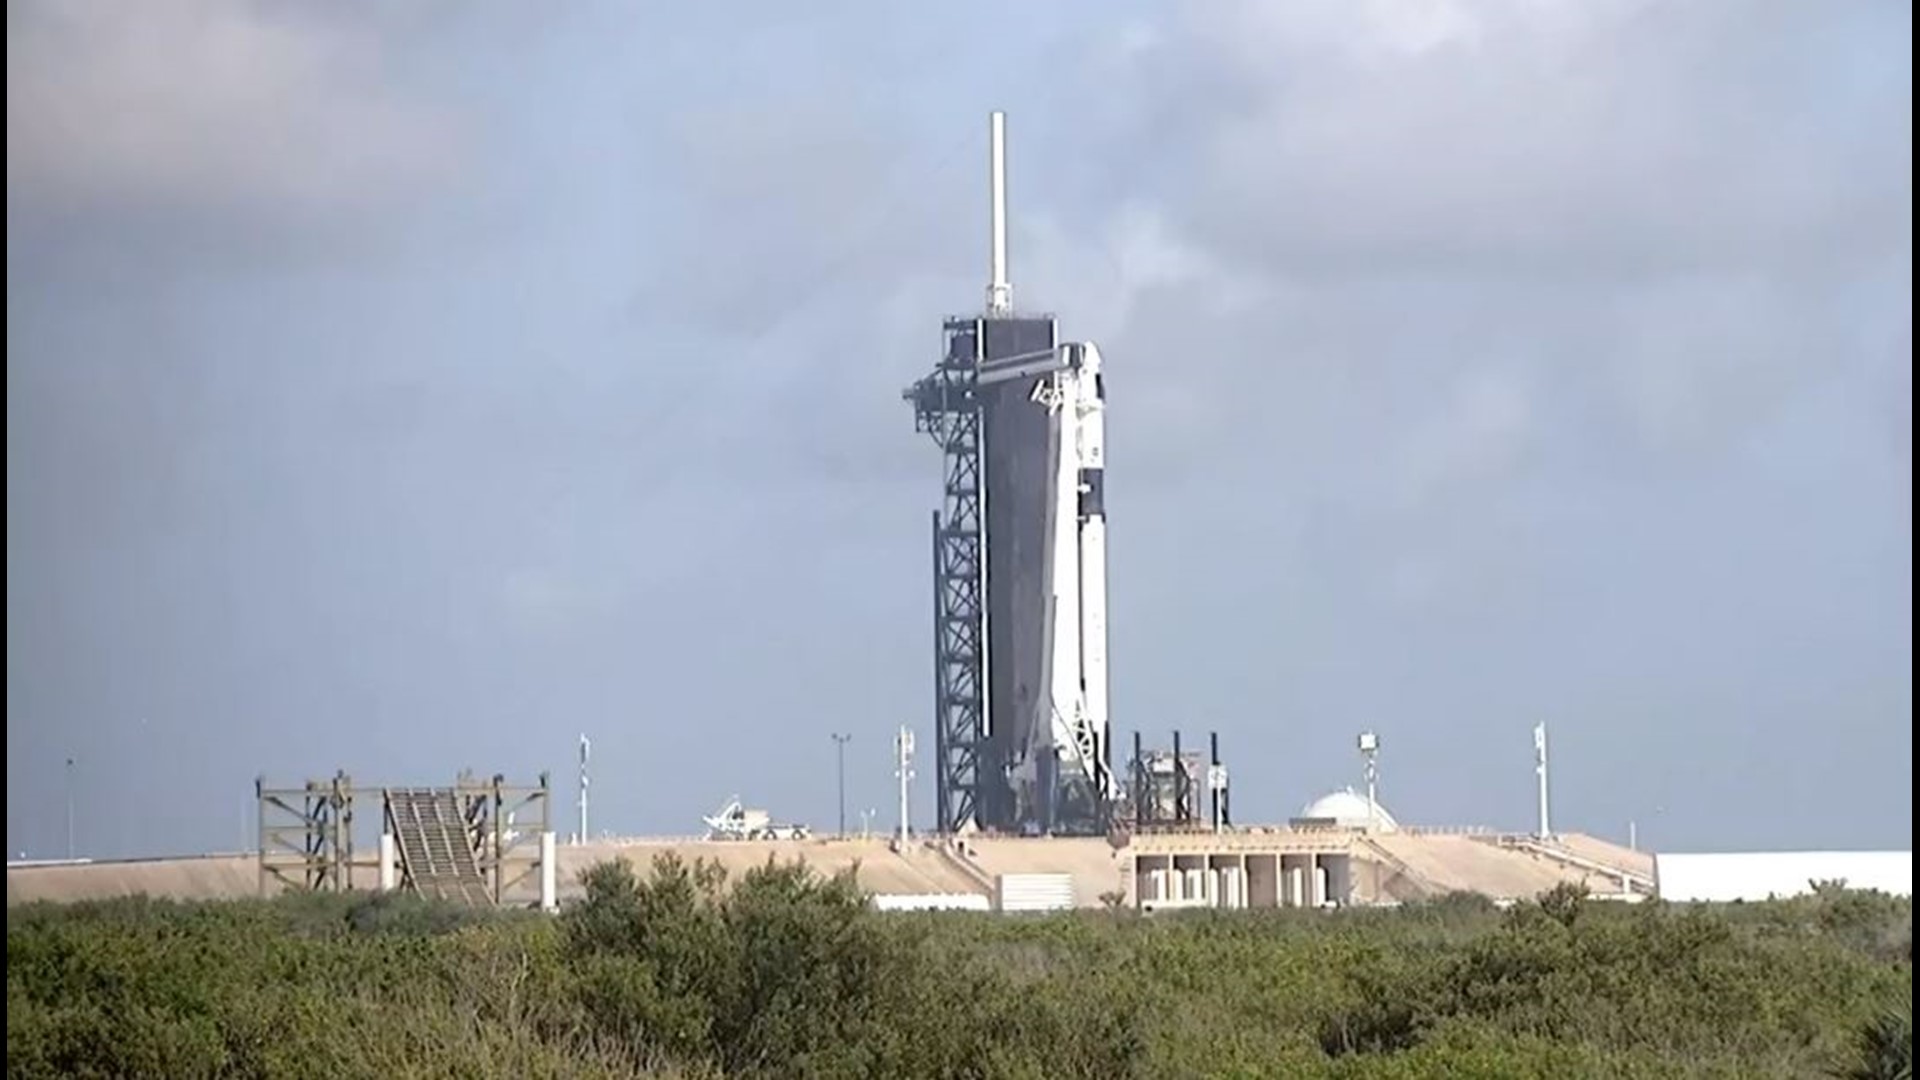 Live launch today. Космический центр Кеннеди Майами. Космодром Кеннеди. Космический центр Кеннеди план. Pl-11 ракета.